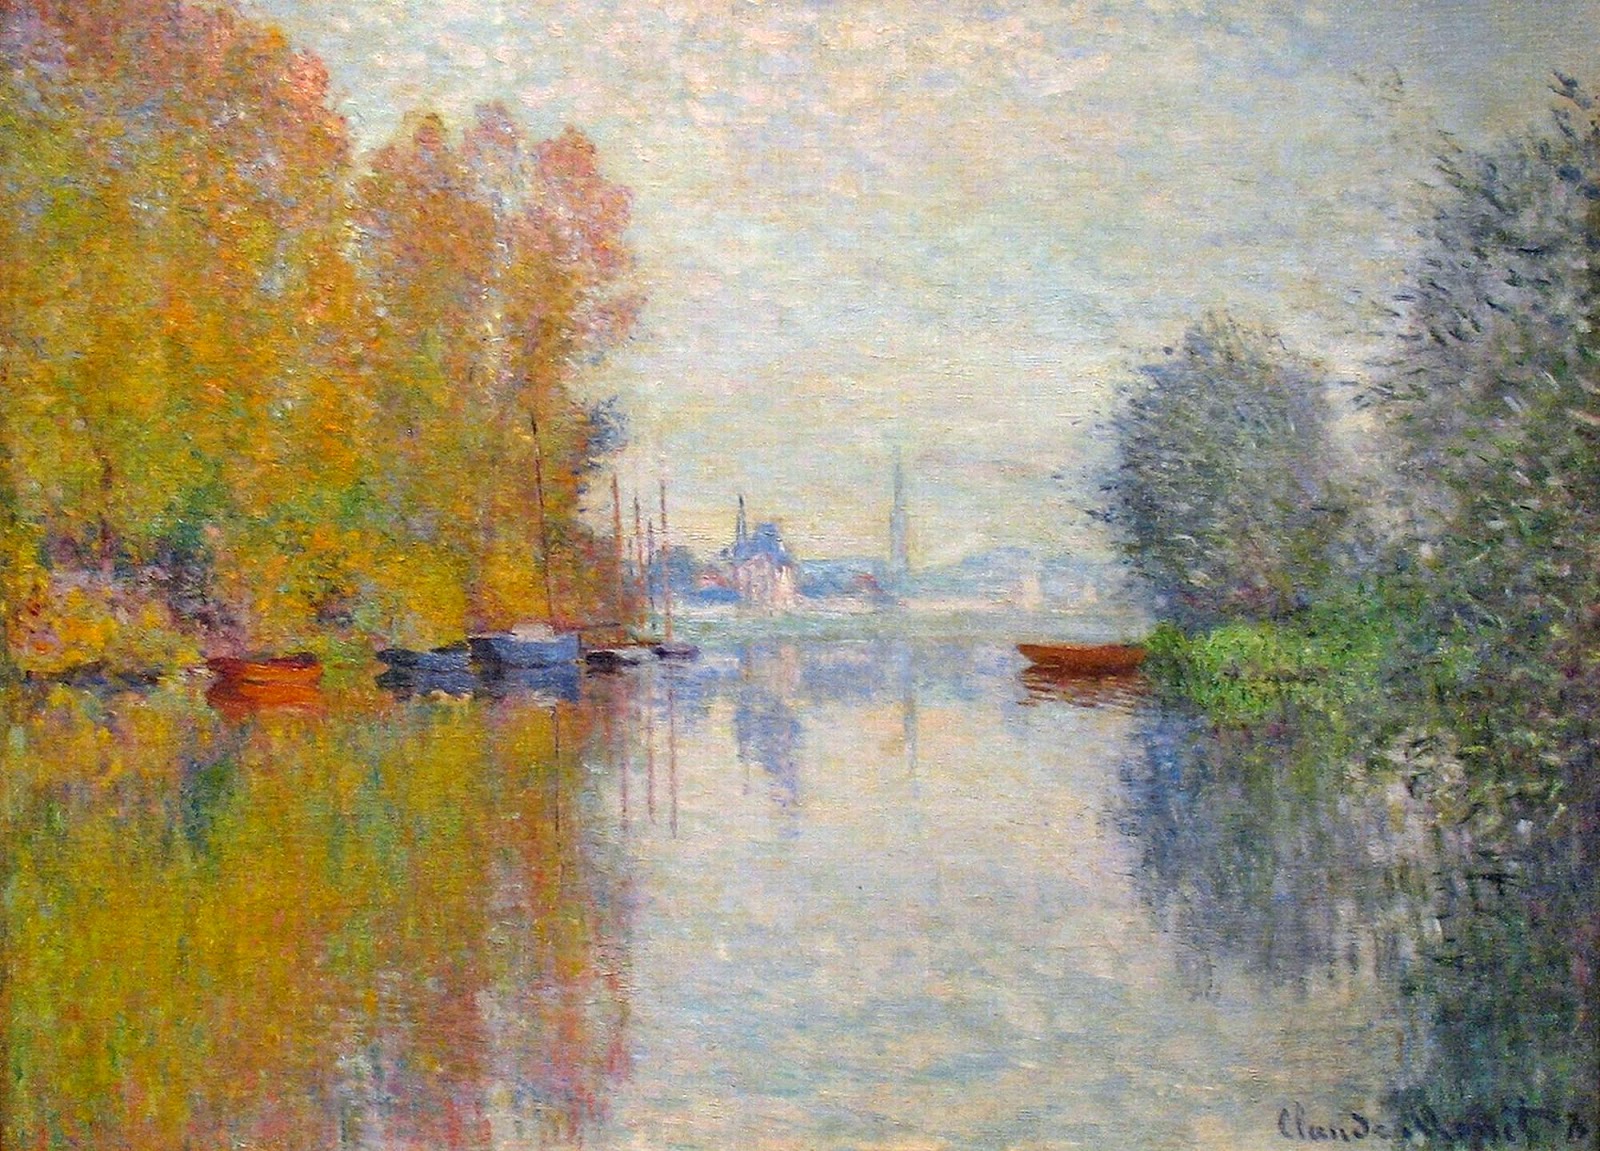 Claude+Monet-1840-1926 (1058).jpg